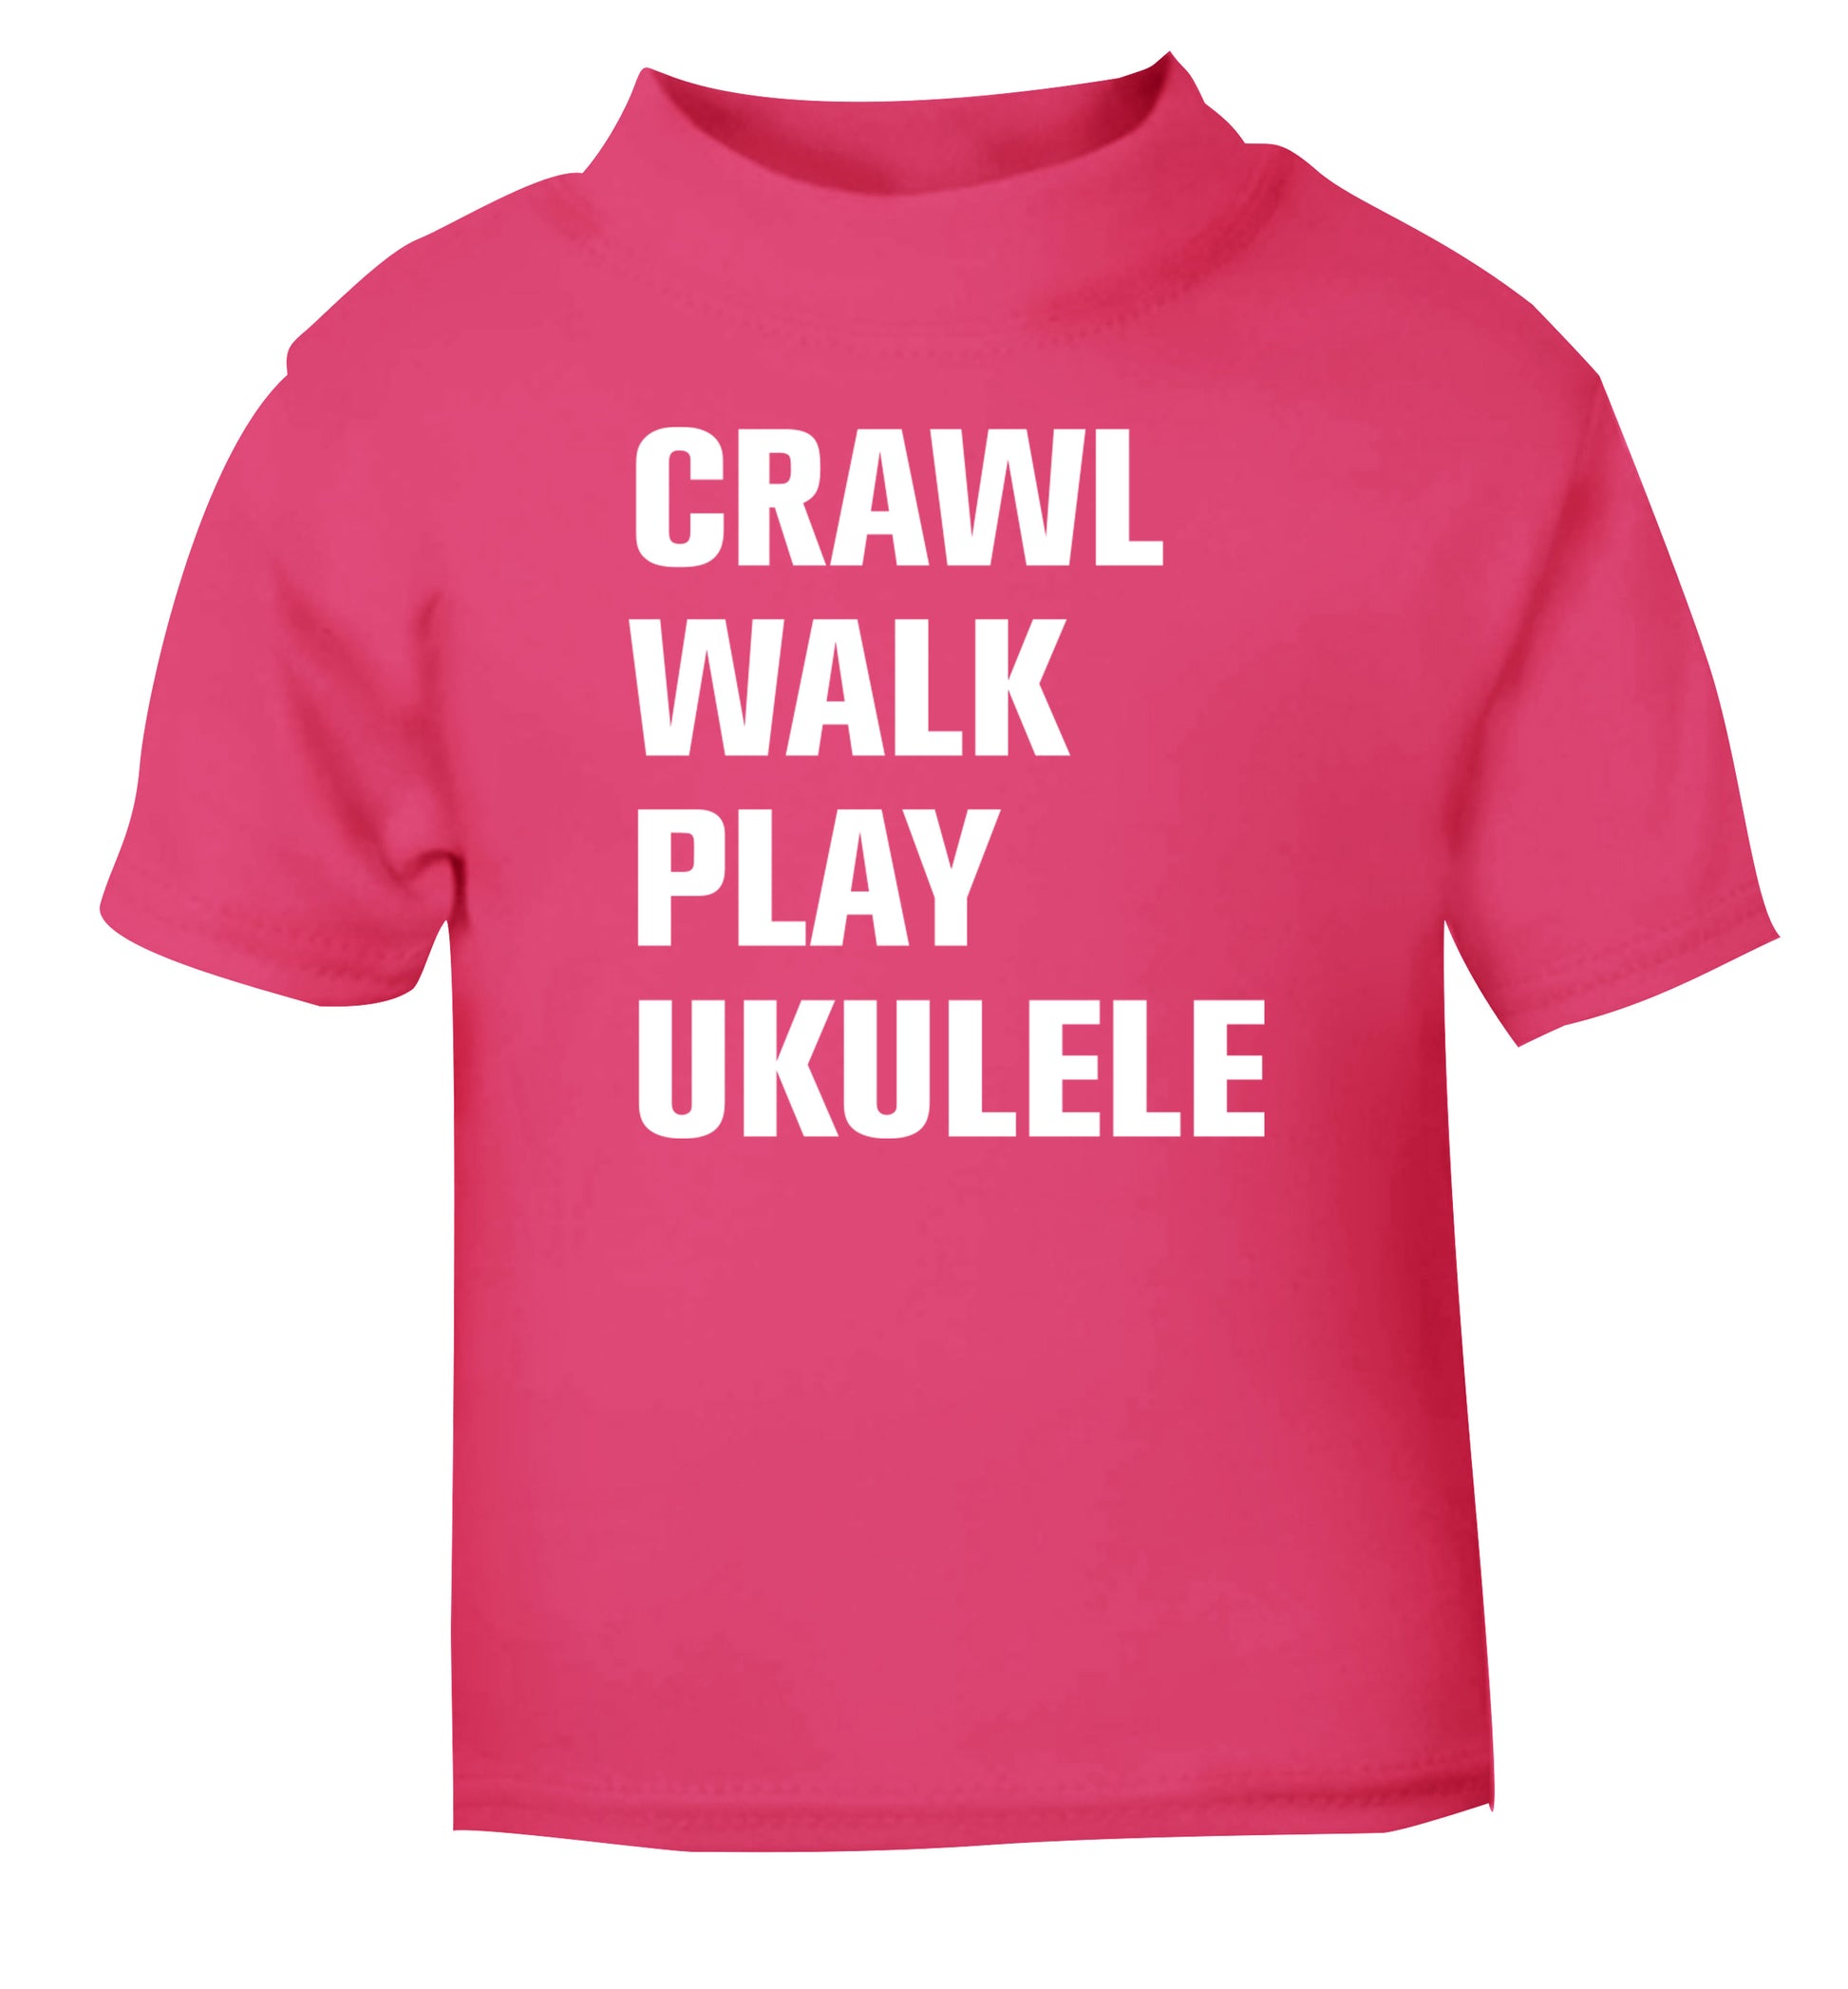 Crawl walk play ukulele pink Baby Toddler Tshirt 2 Years